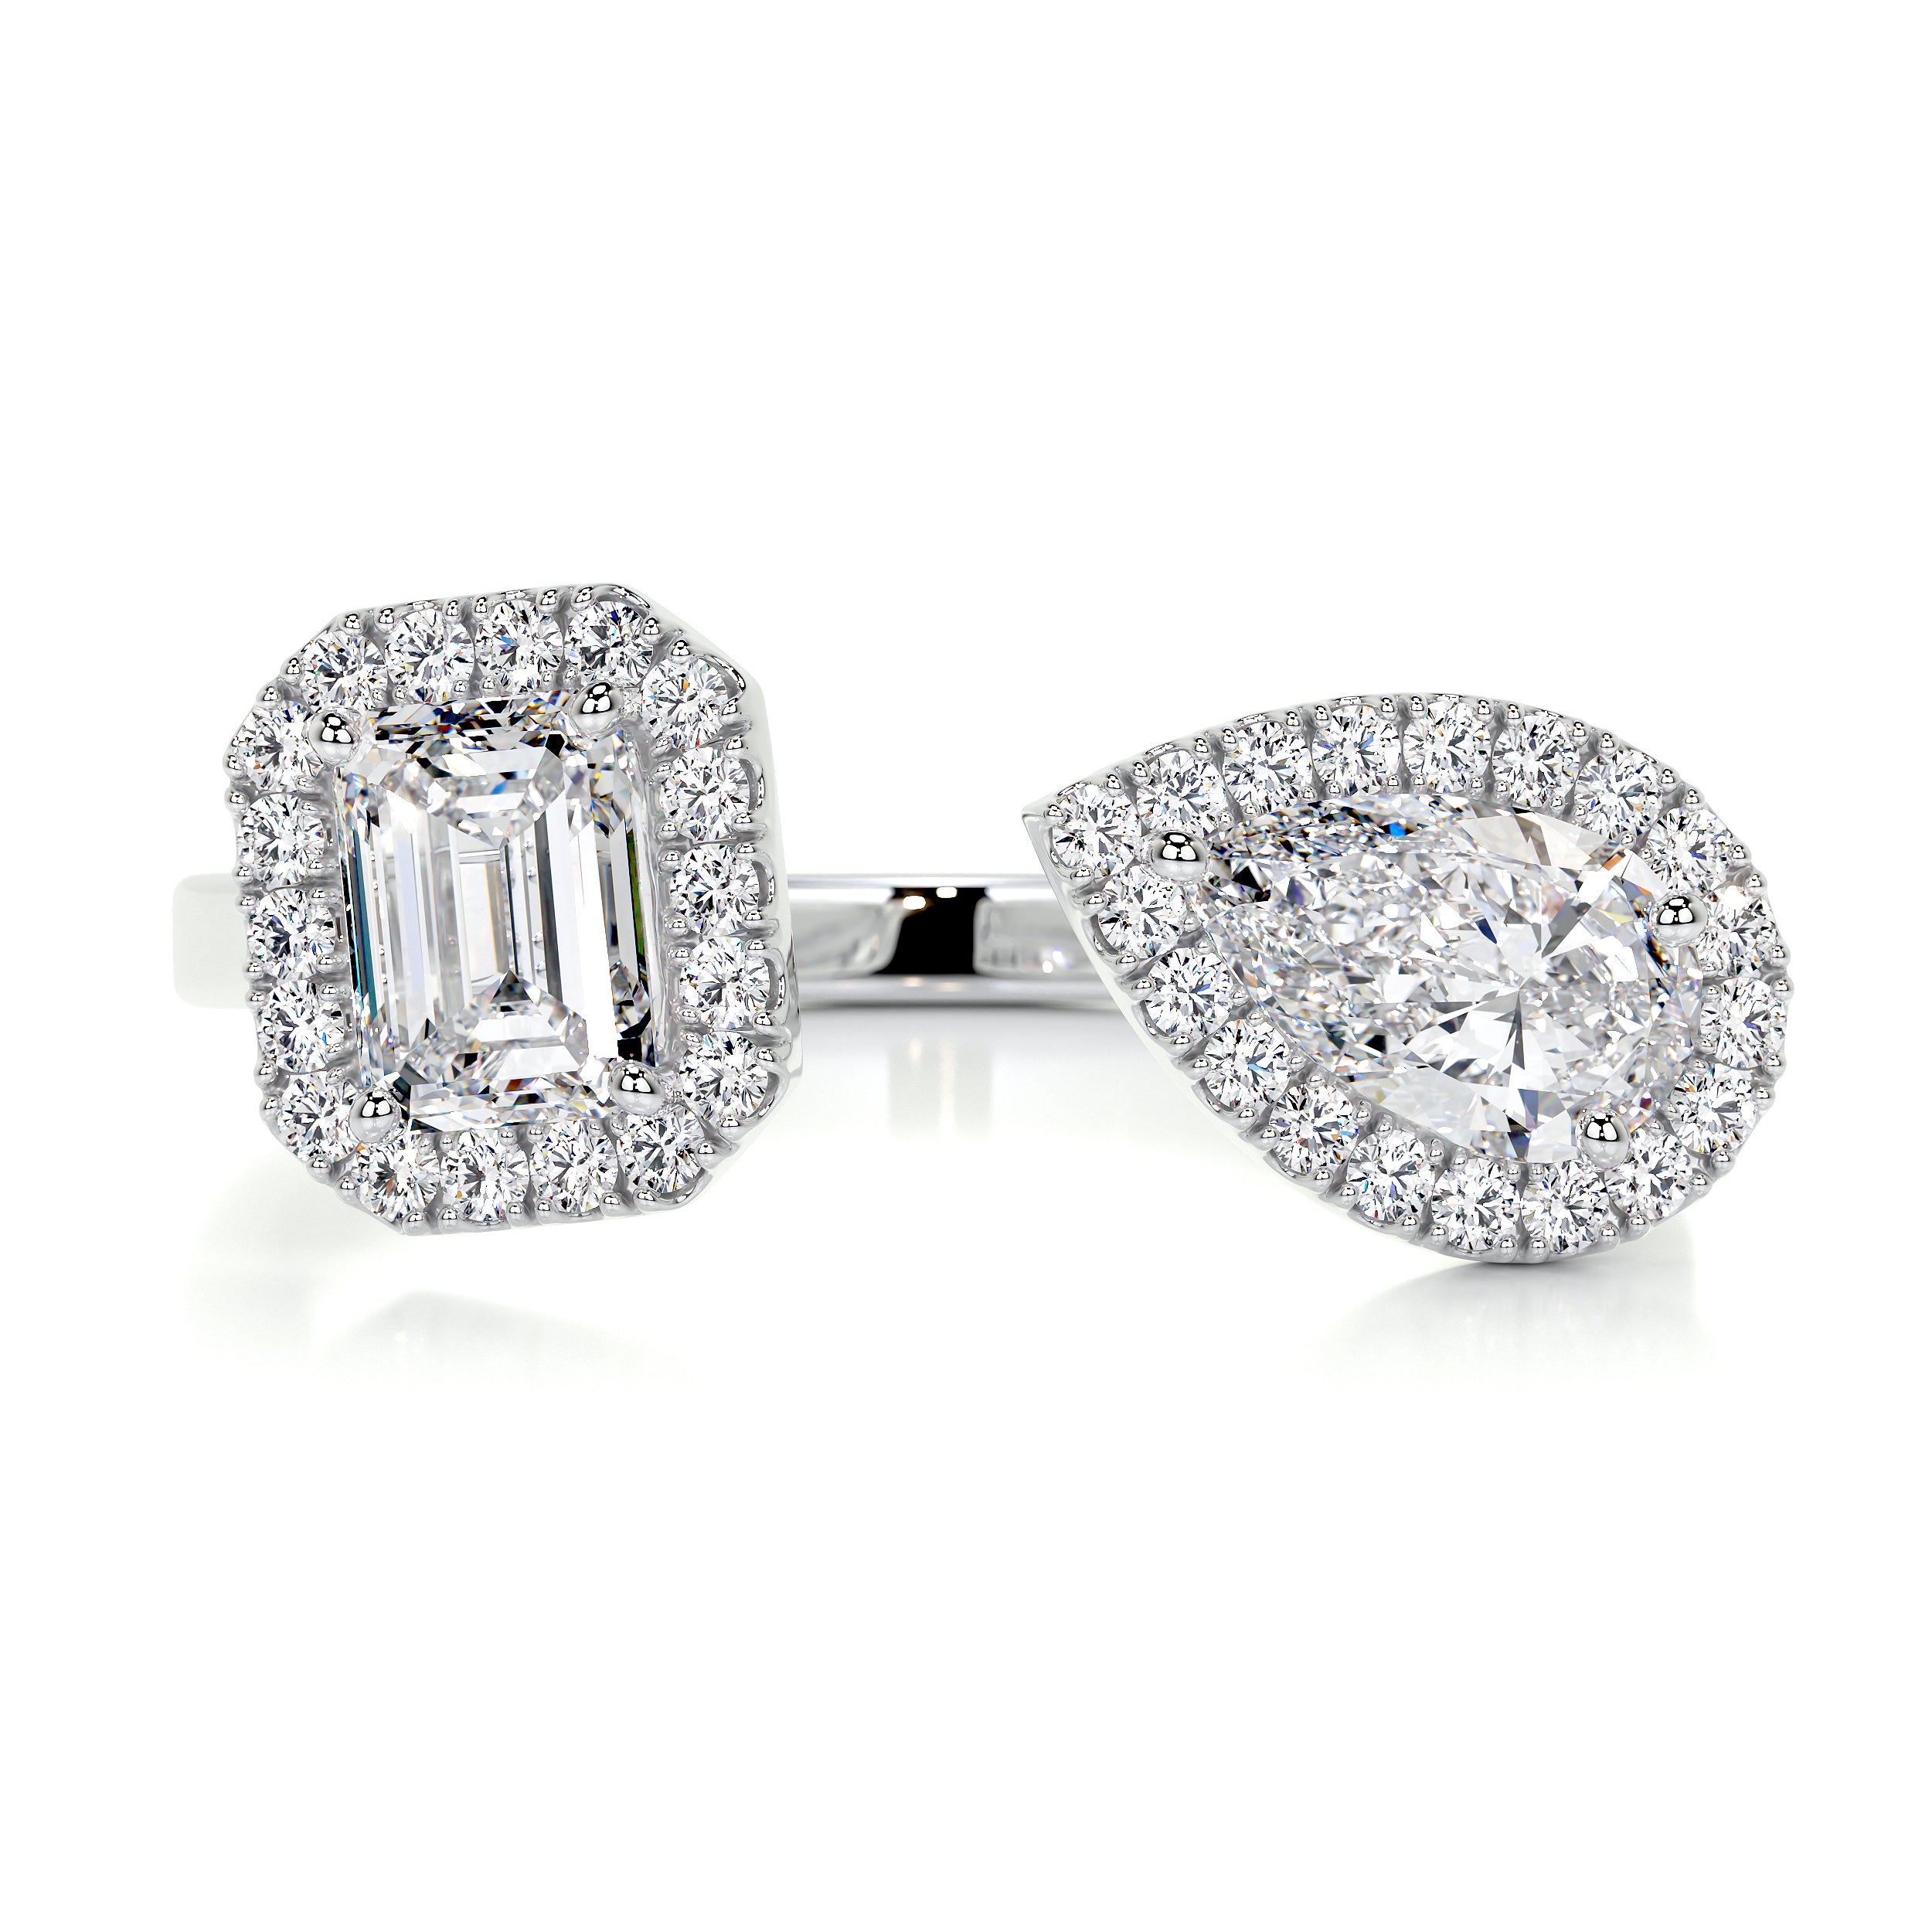 Edith Designer Diamond Ring   (1.2 Carat) -14K White Gold